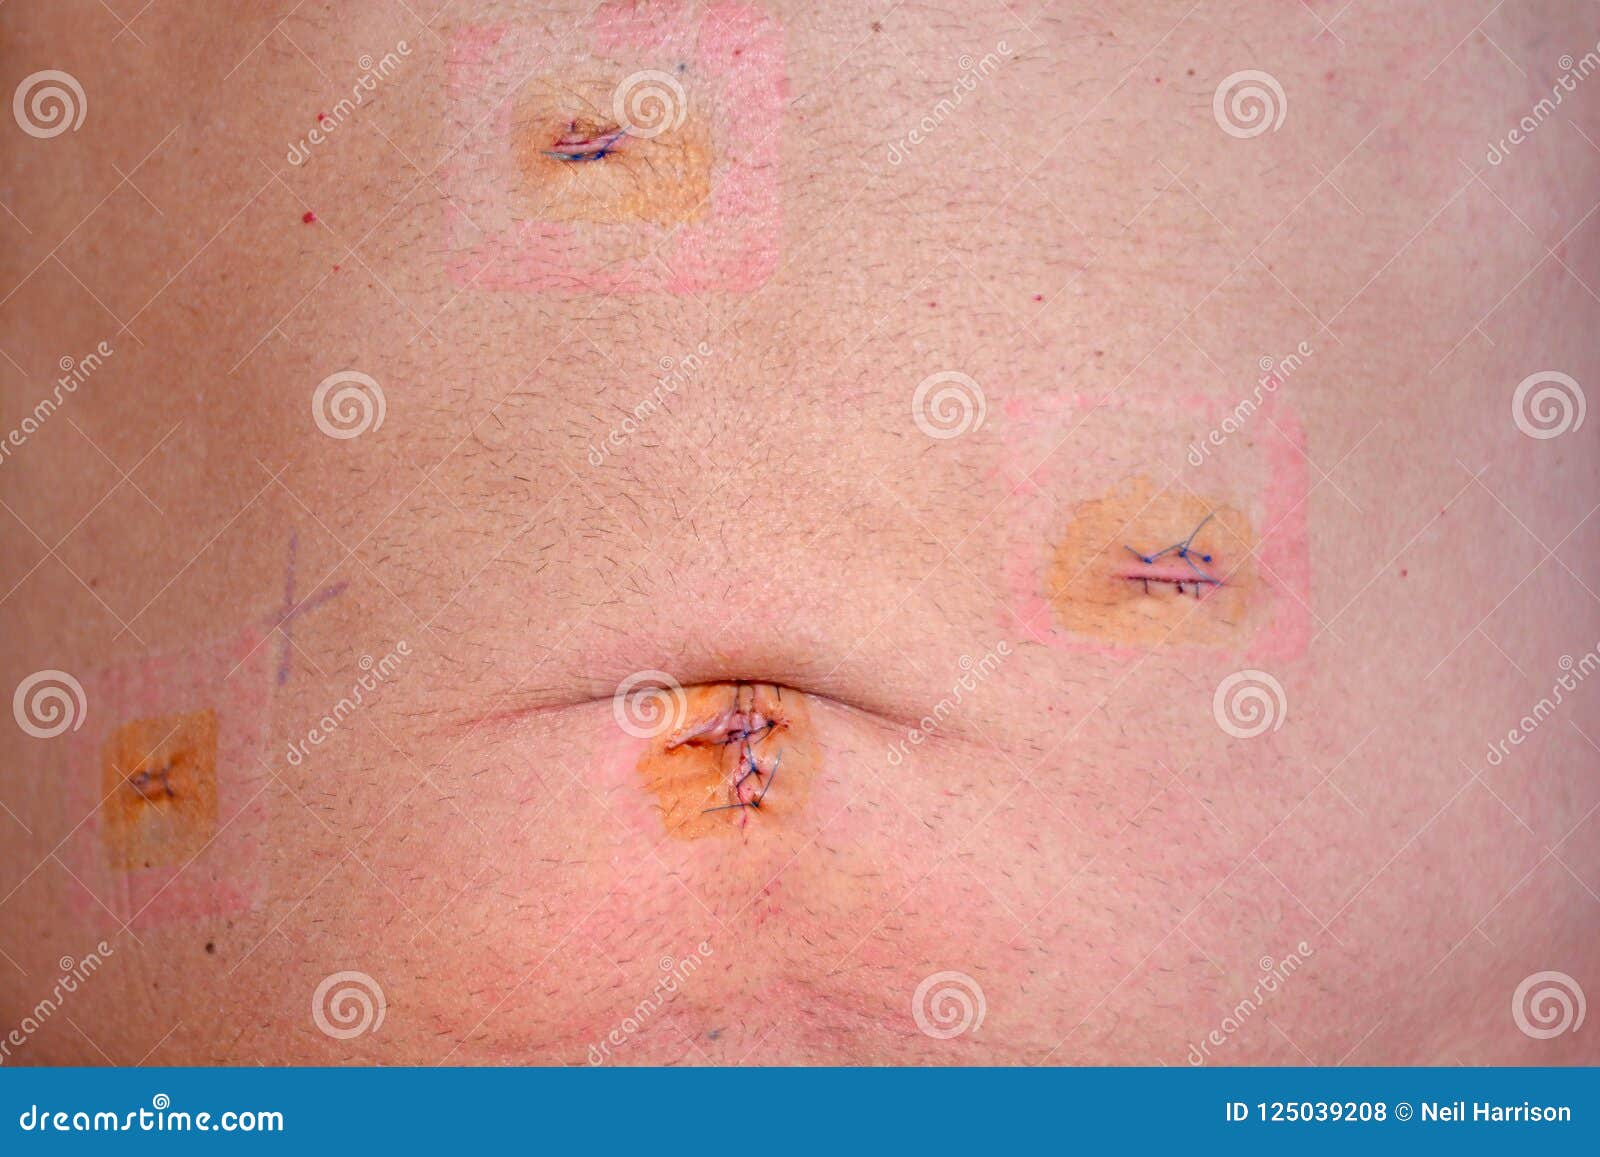 laparoscopic cholocystectomy scars